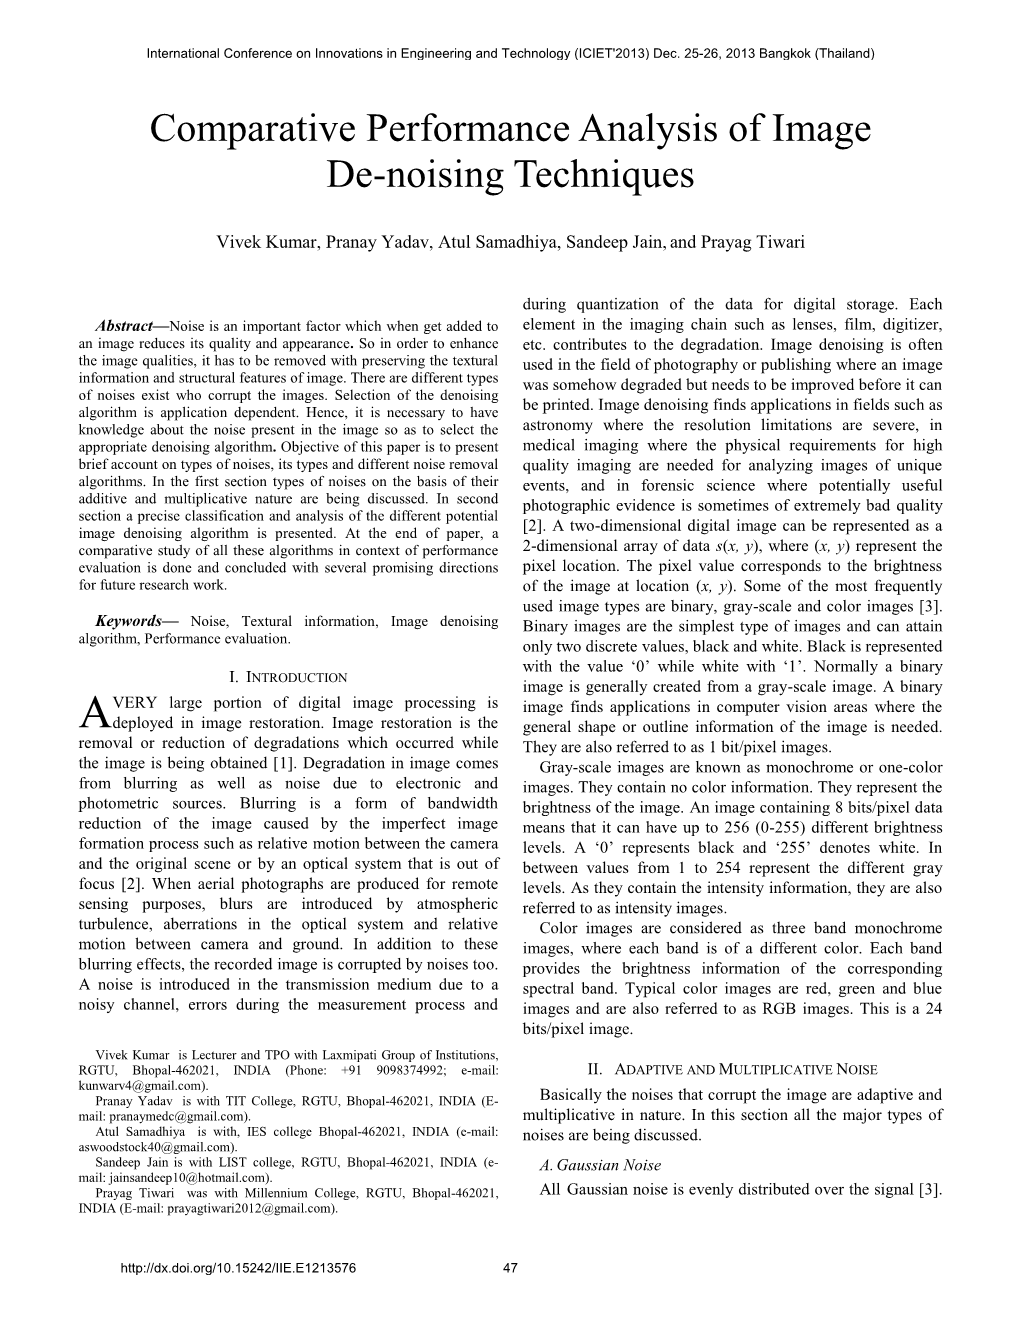 Comparative Performance Analysis of Image De-Noising Techniques